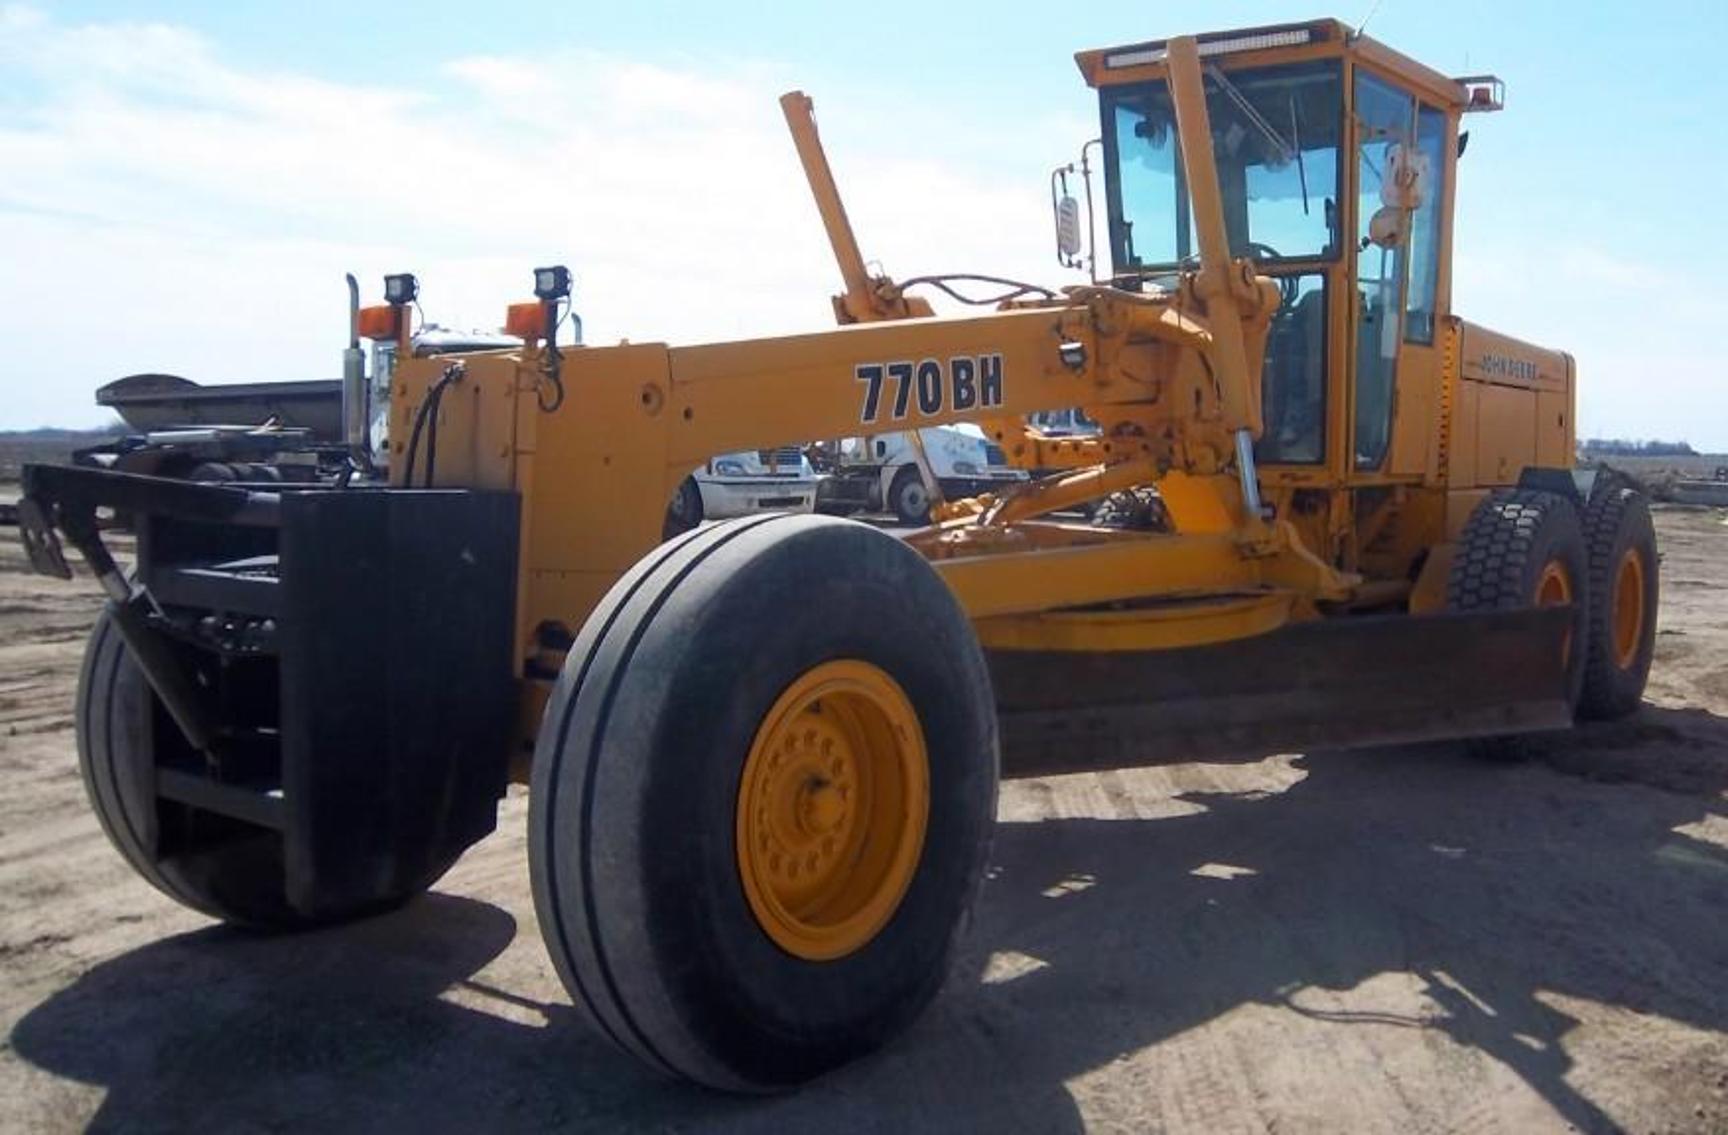 Construction Equipment: Excavators, Dozer, Trucks, Packers & More